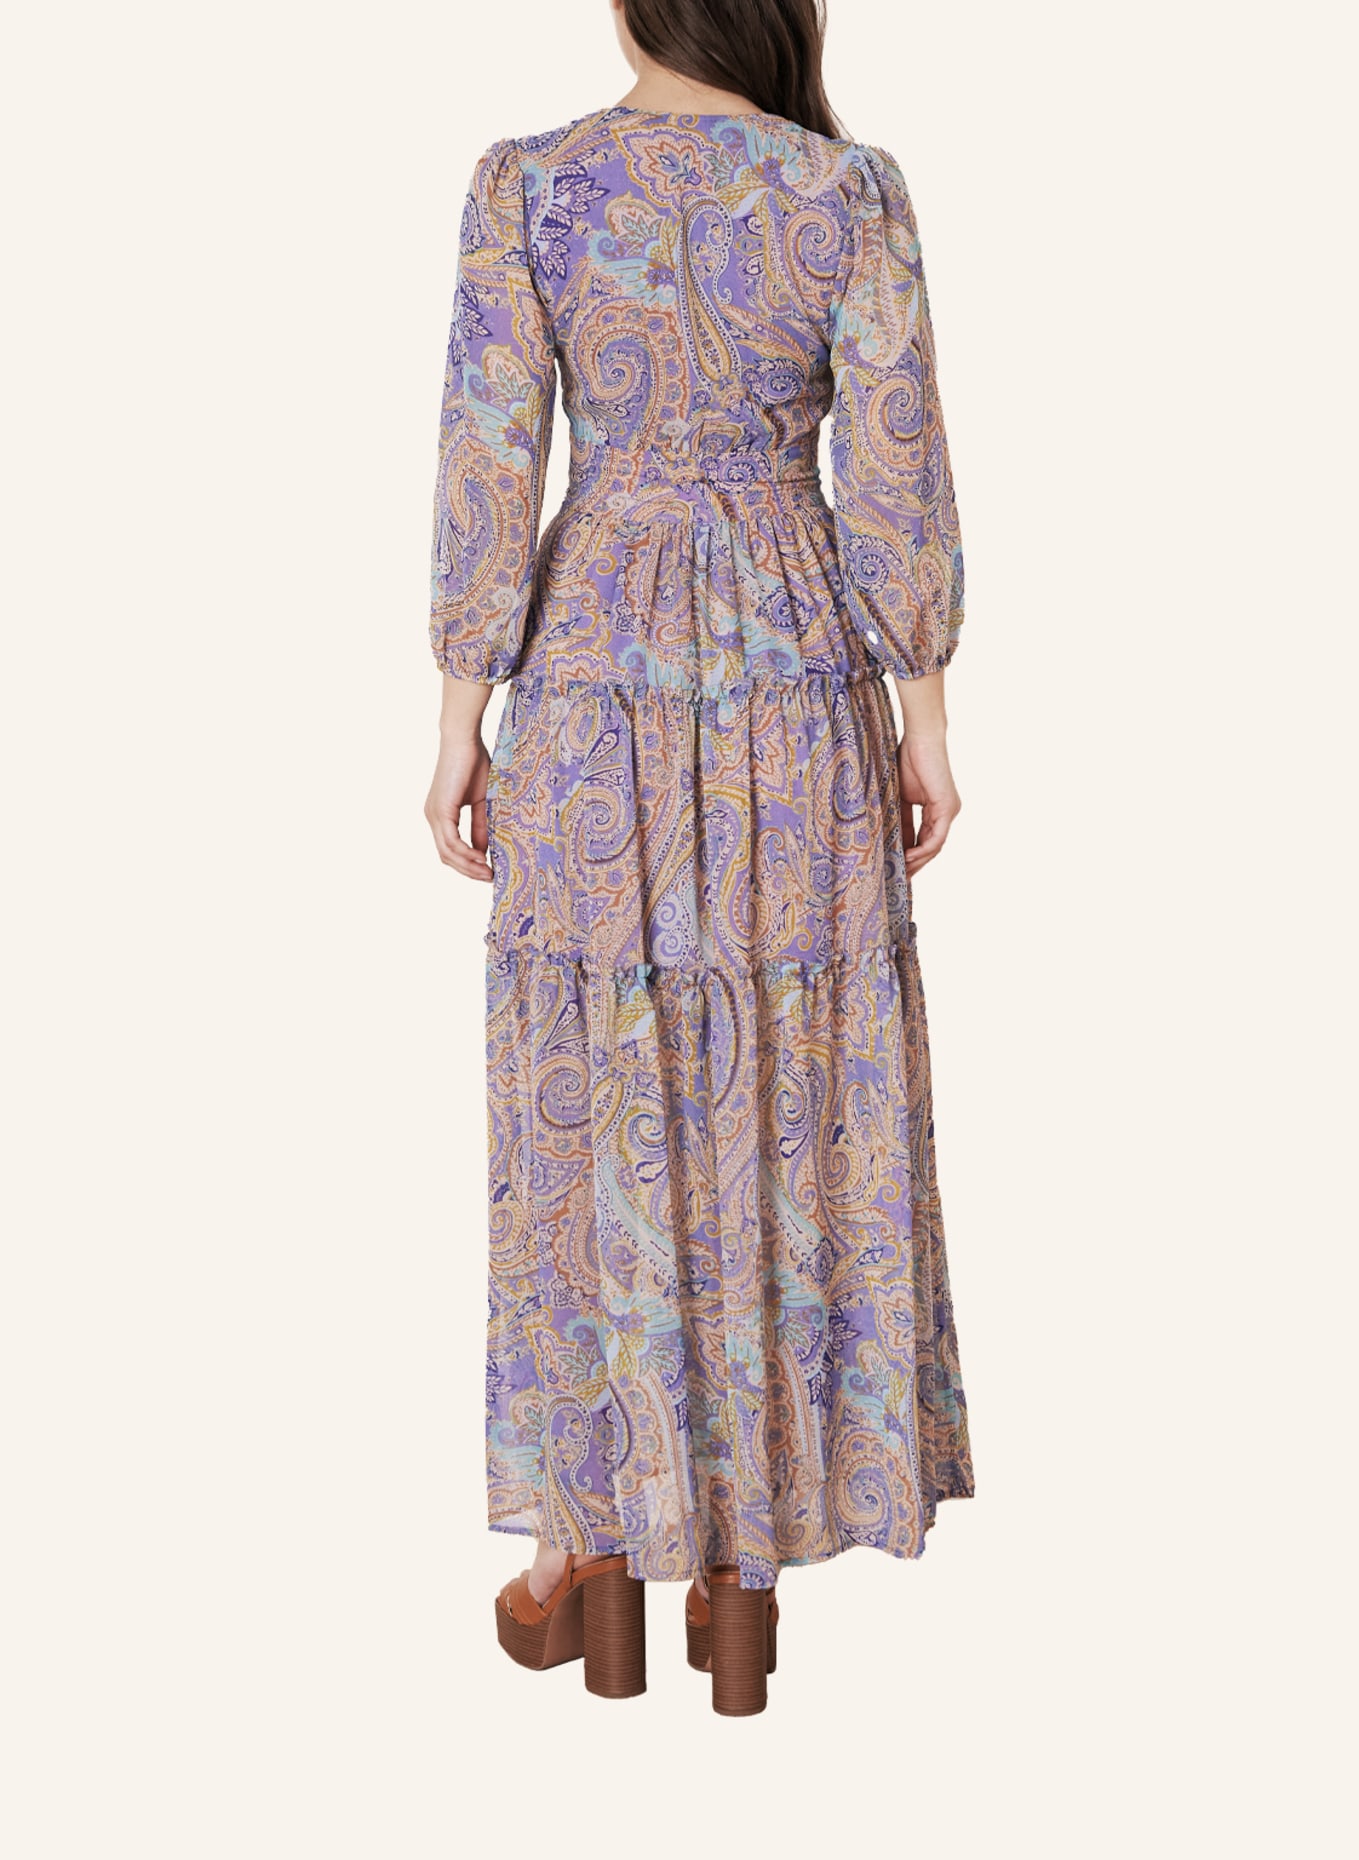 CLAIRE LUISE Kleid, Farbe: LILA (Bild 2)